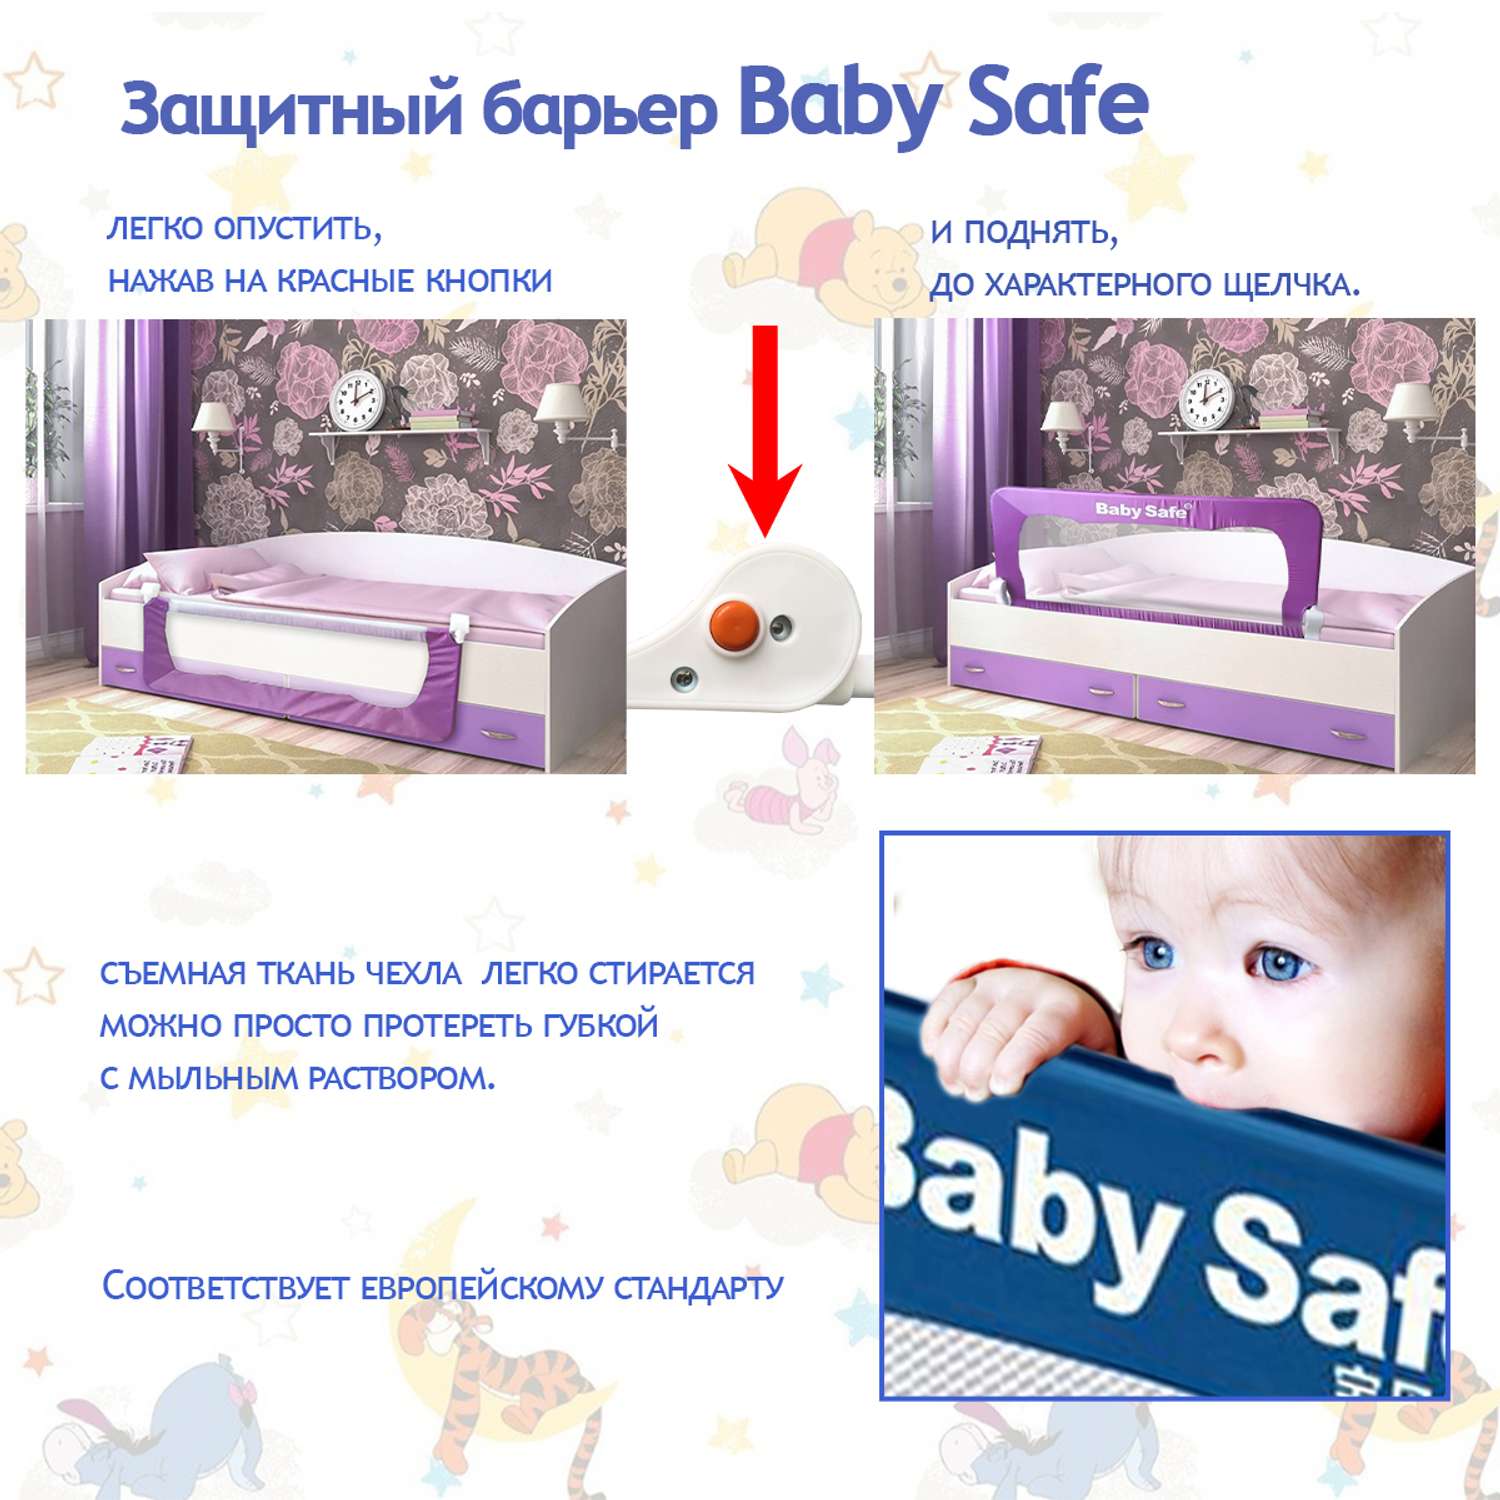 Барьер защитный для кровати Baby Safe защитный для кровати Ушки 150х66 бежевый - фото 5